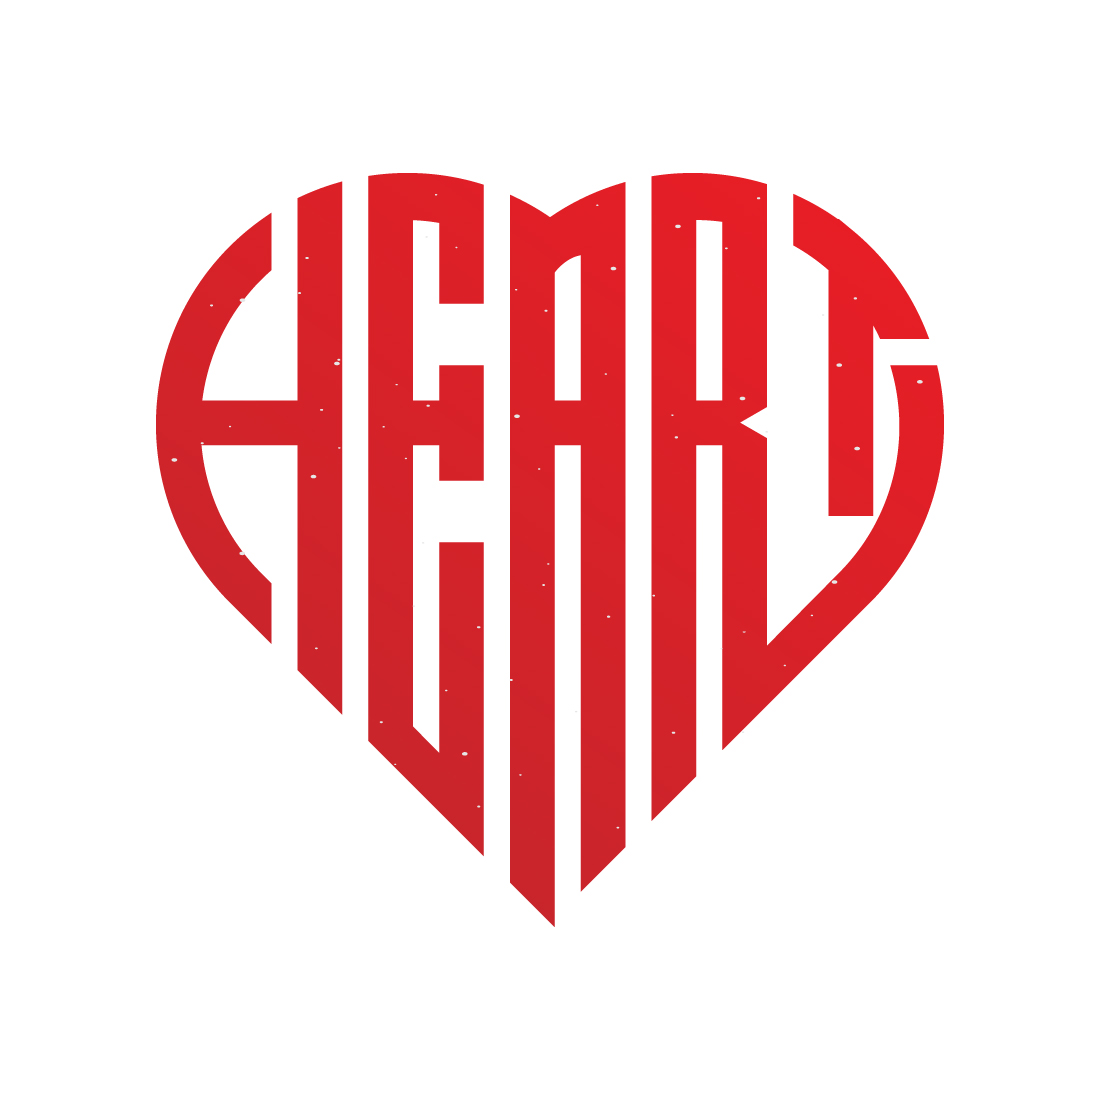 HEART logo design cover image.